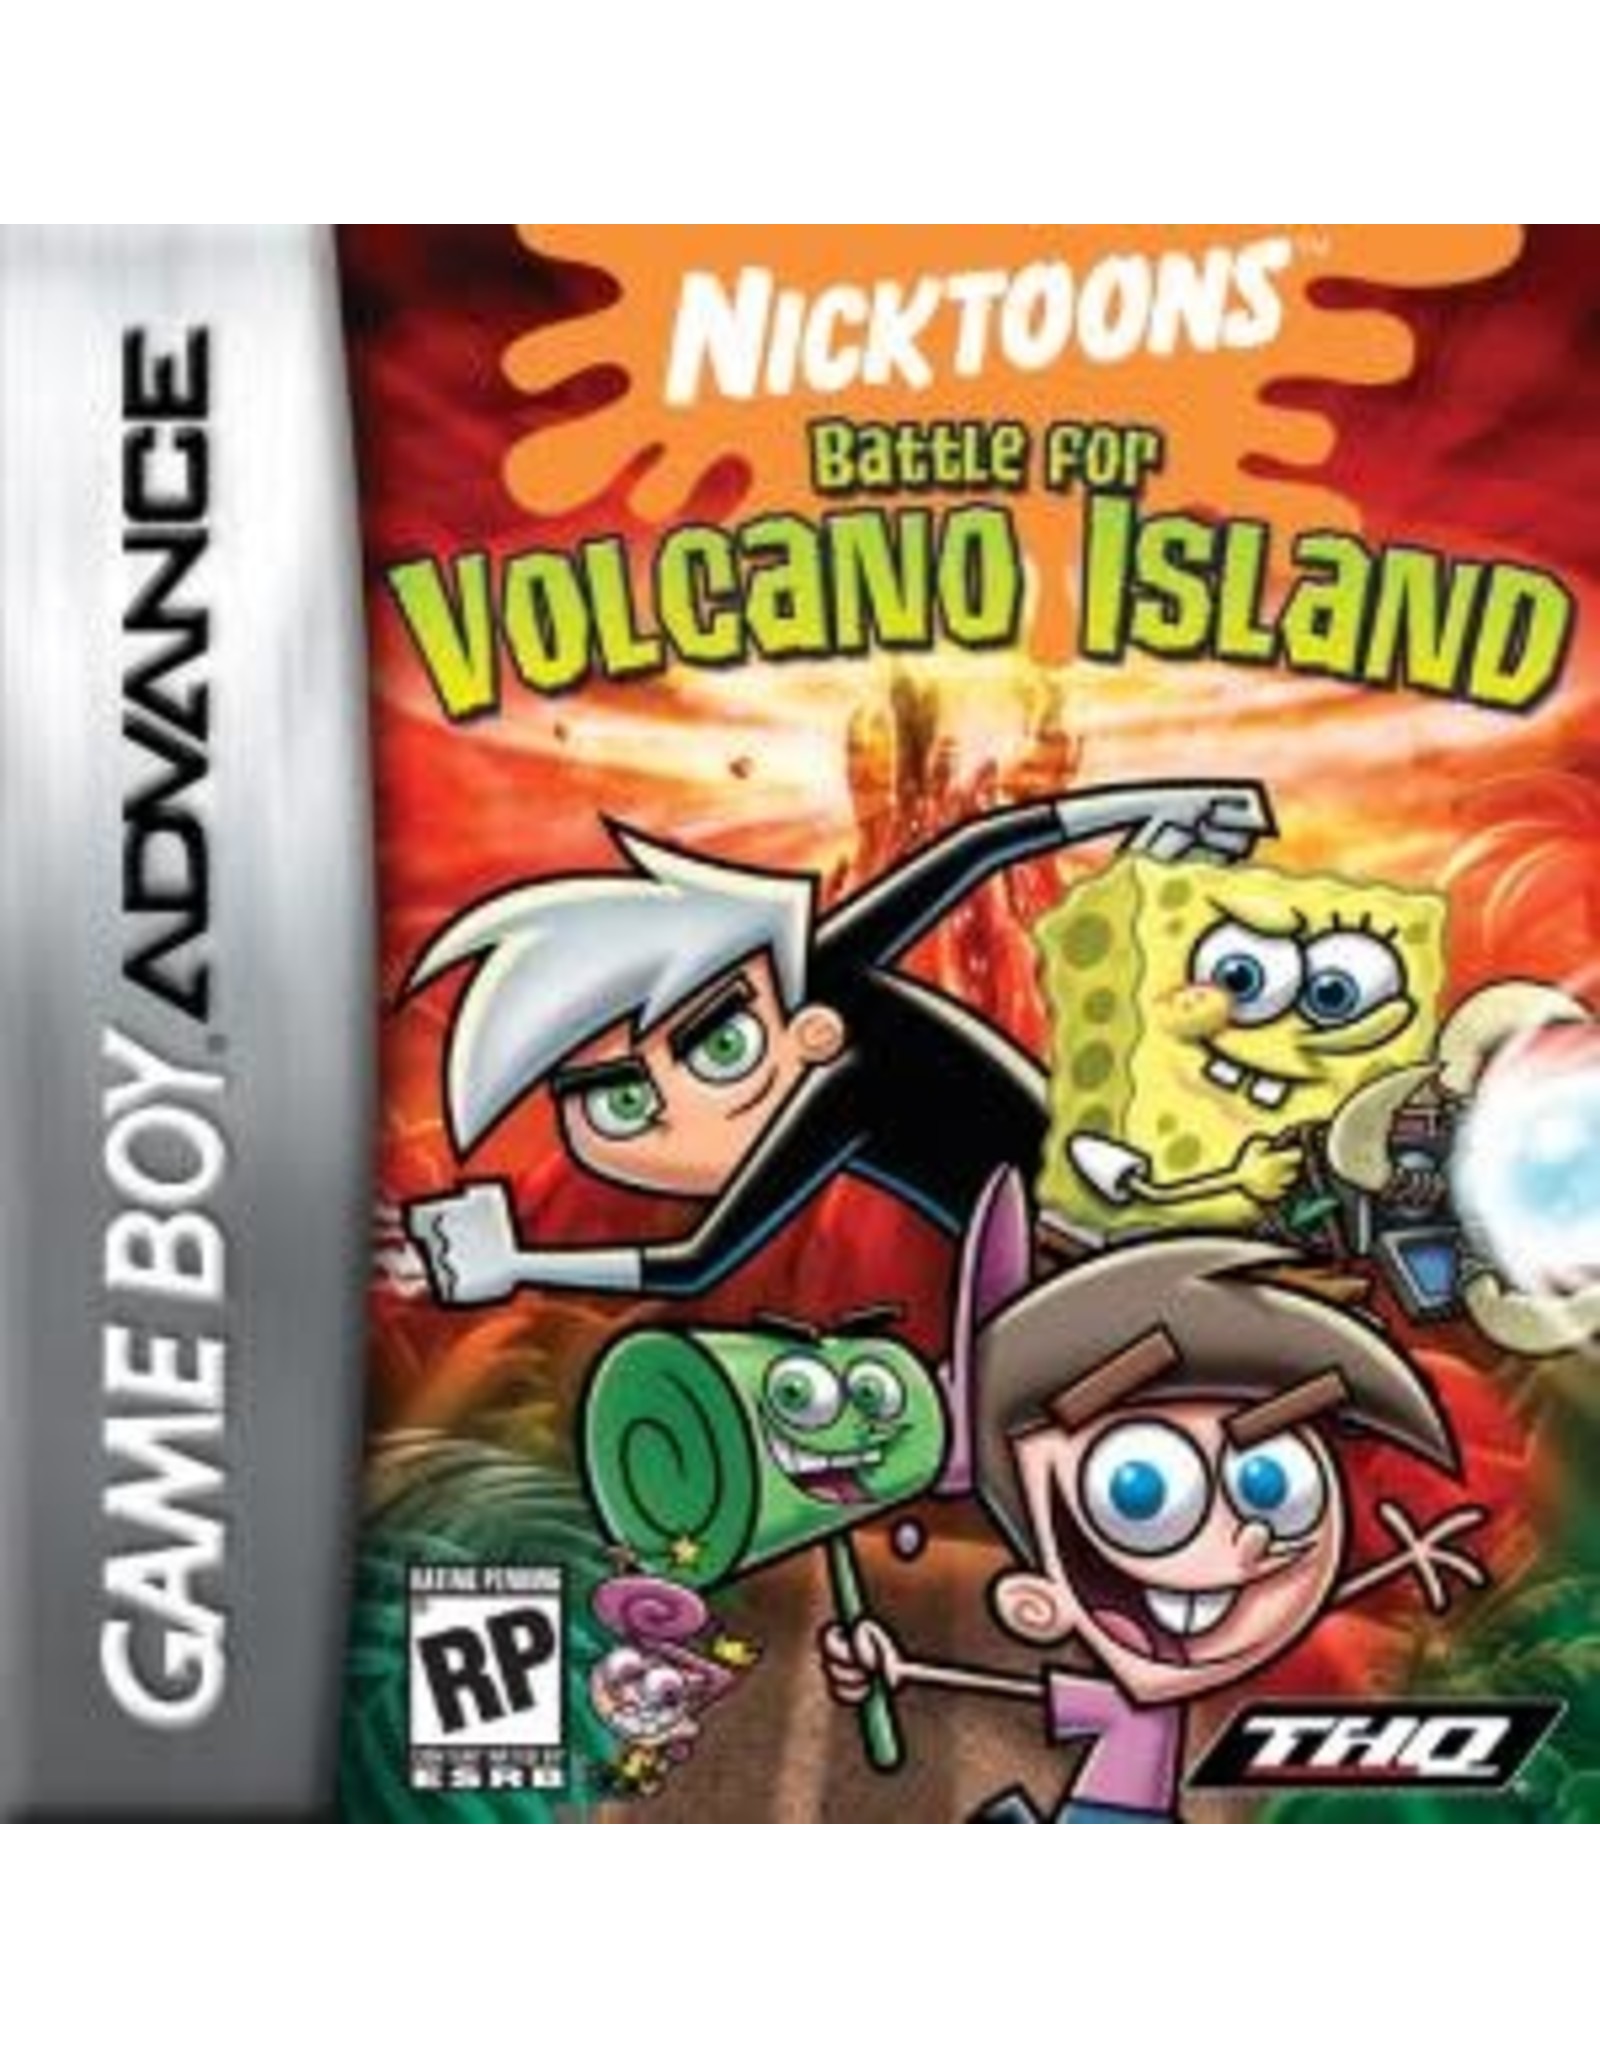 Game Boy Advance Nicktoons Battle for Volcano Island (Cart Only)